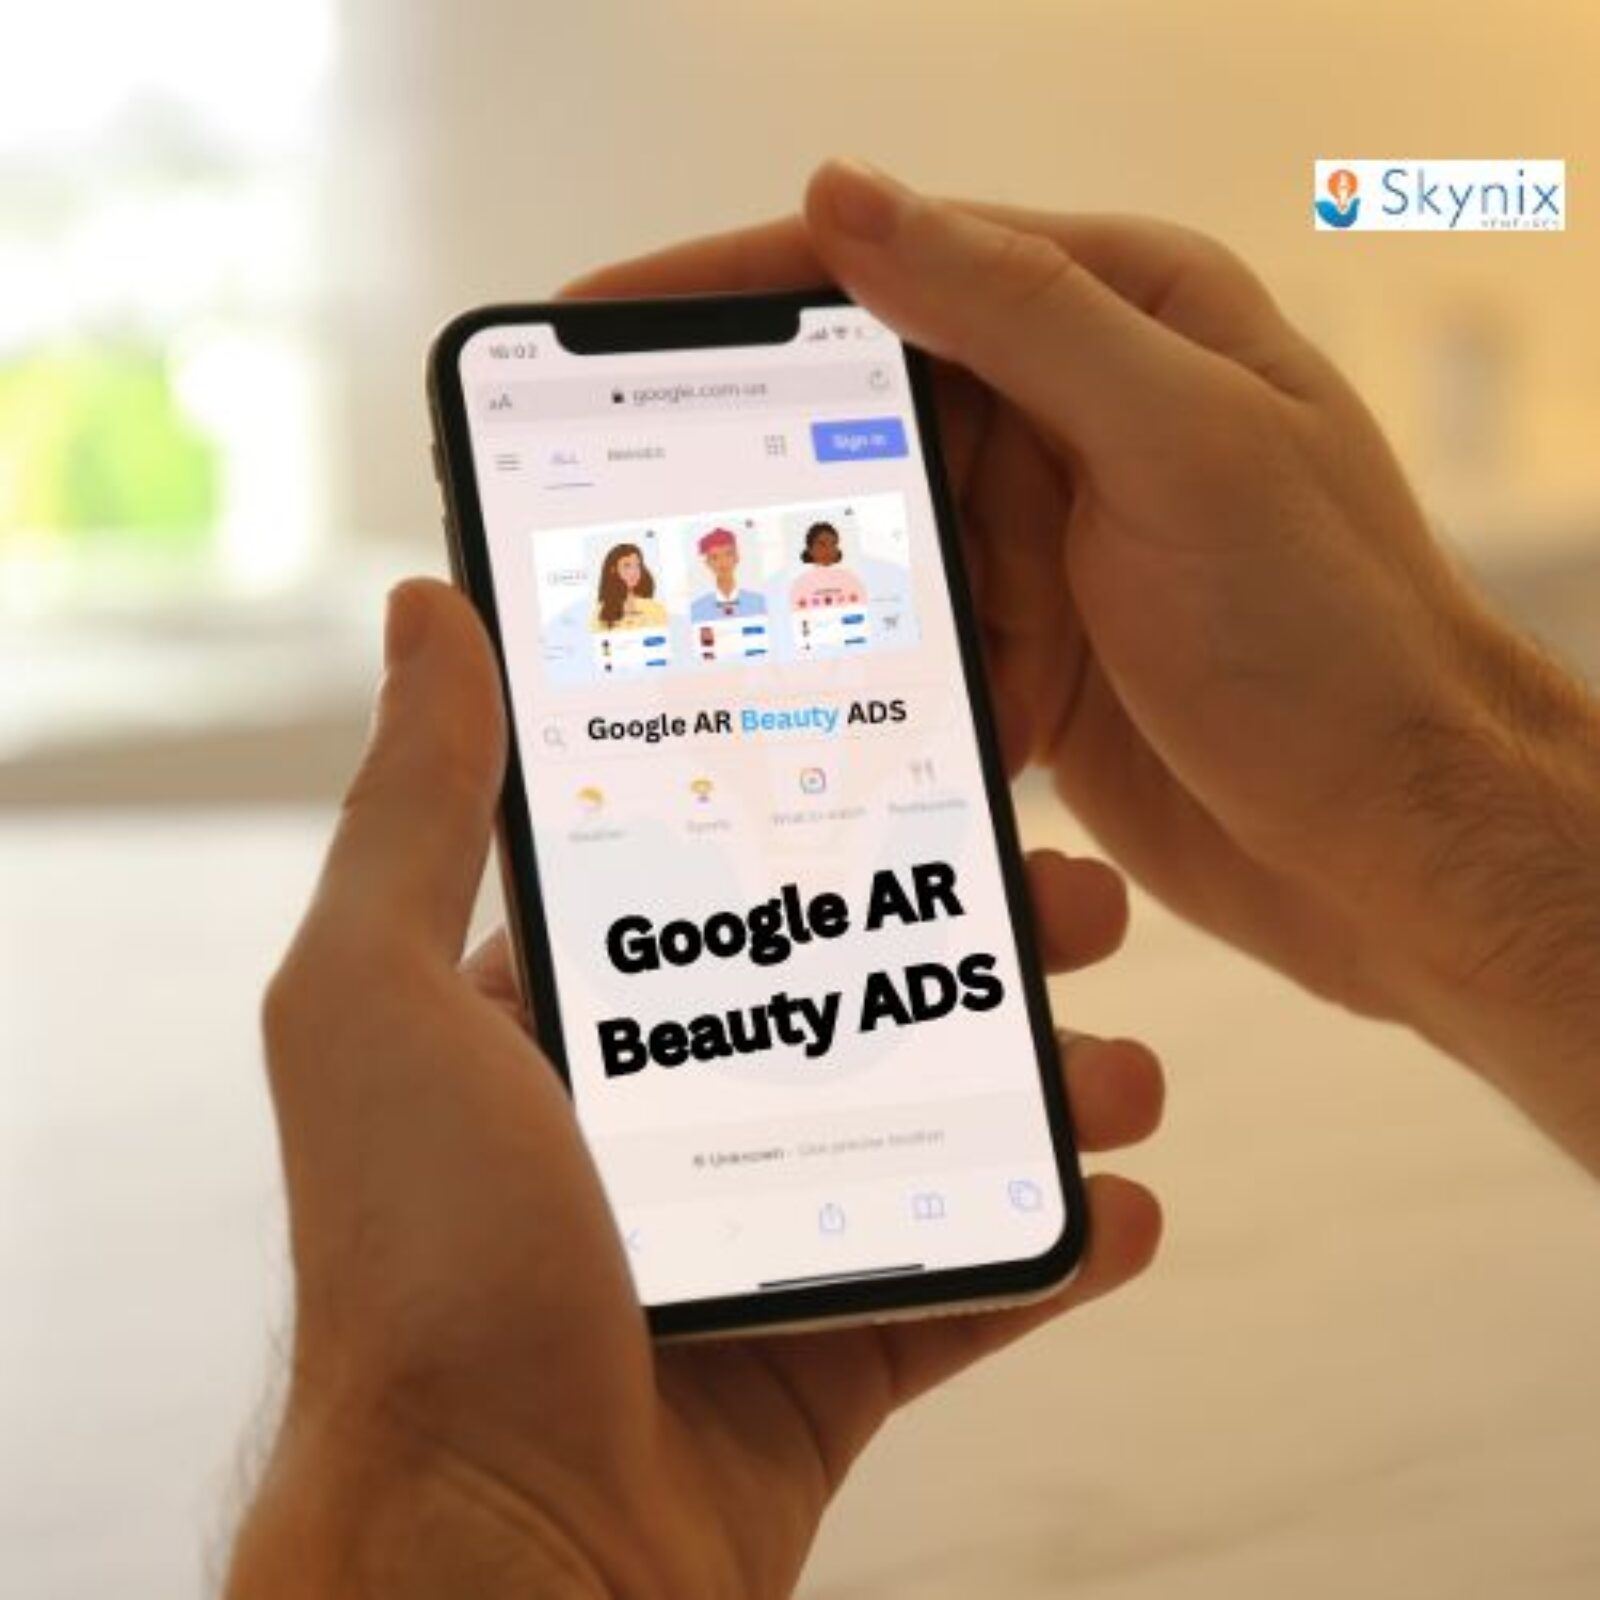 Google AR Beauty ADS